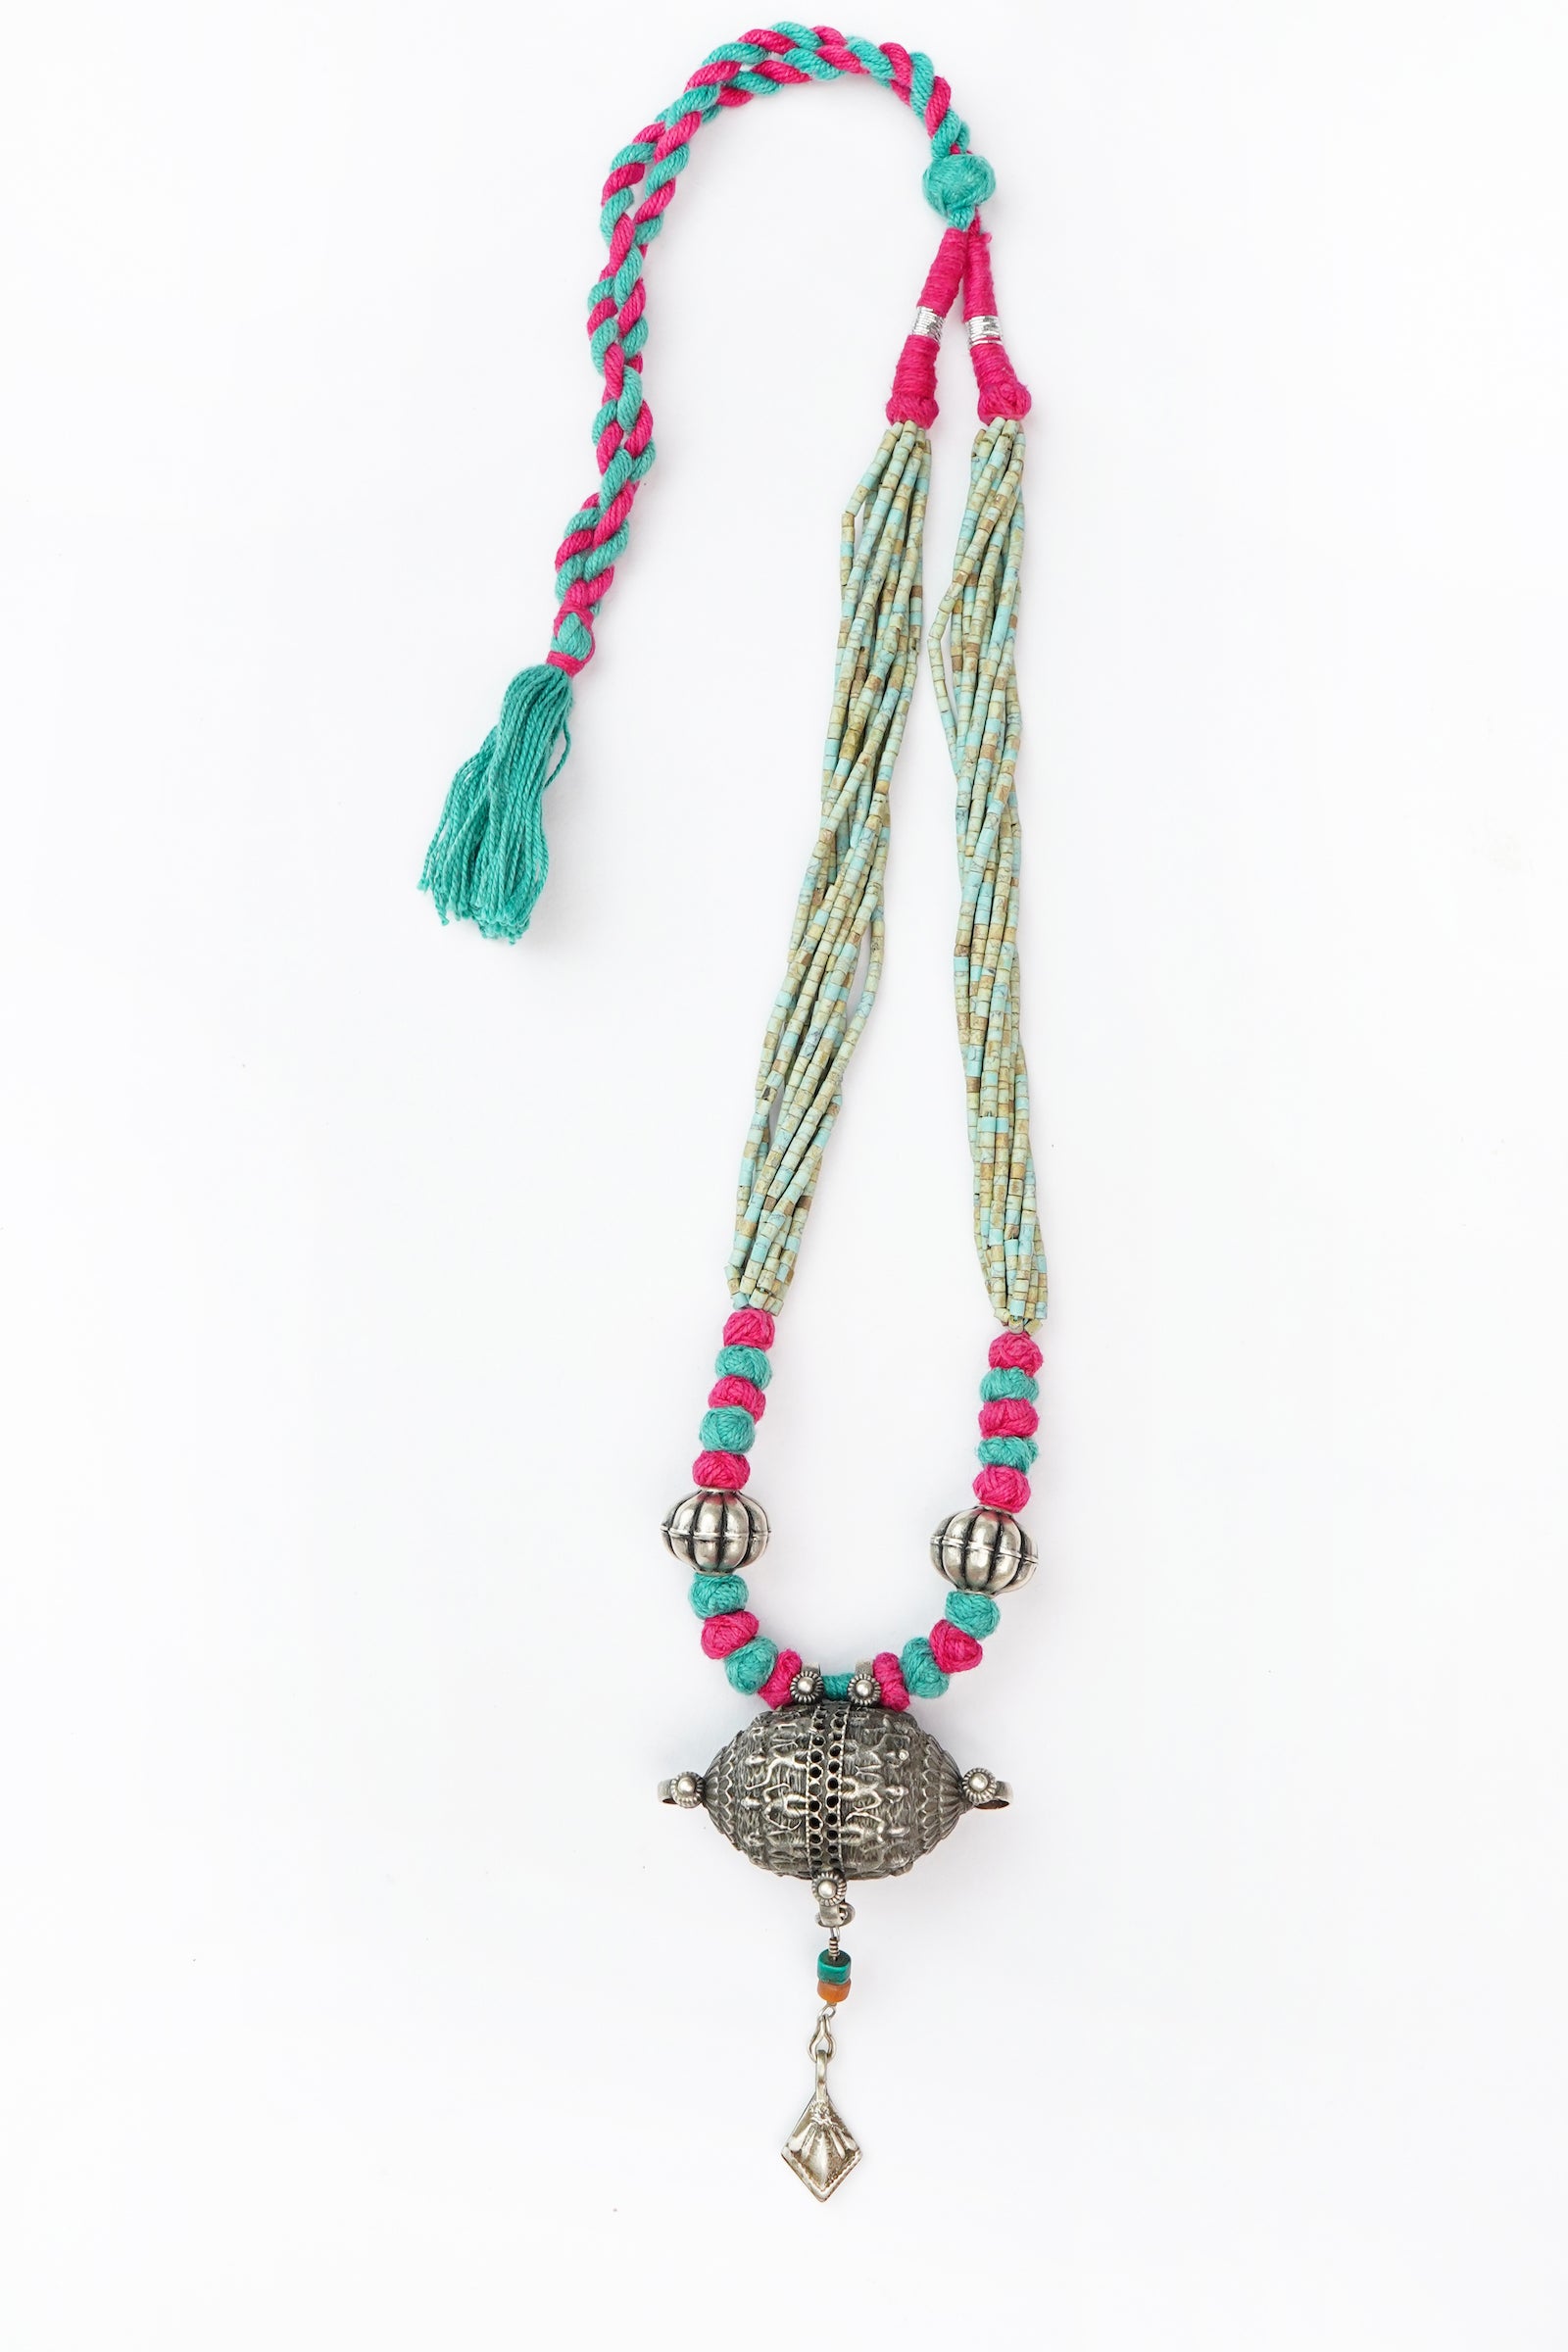 Silver Oxidized Necklace with Turquoise Beads - Neeta Boochra Jewellery